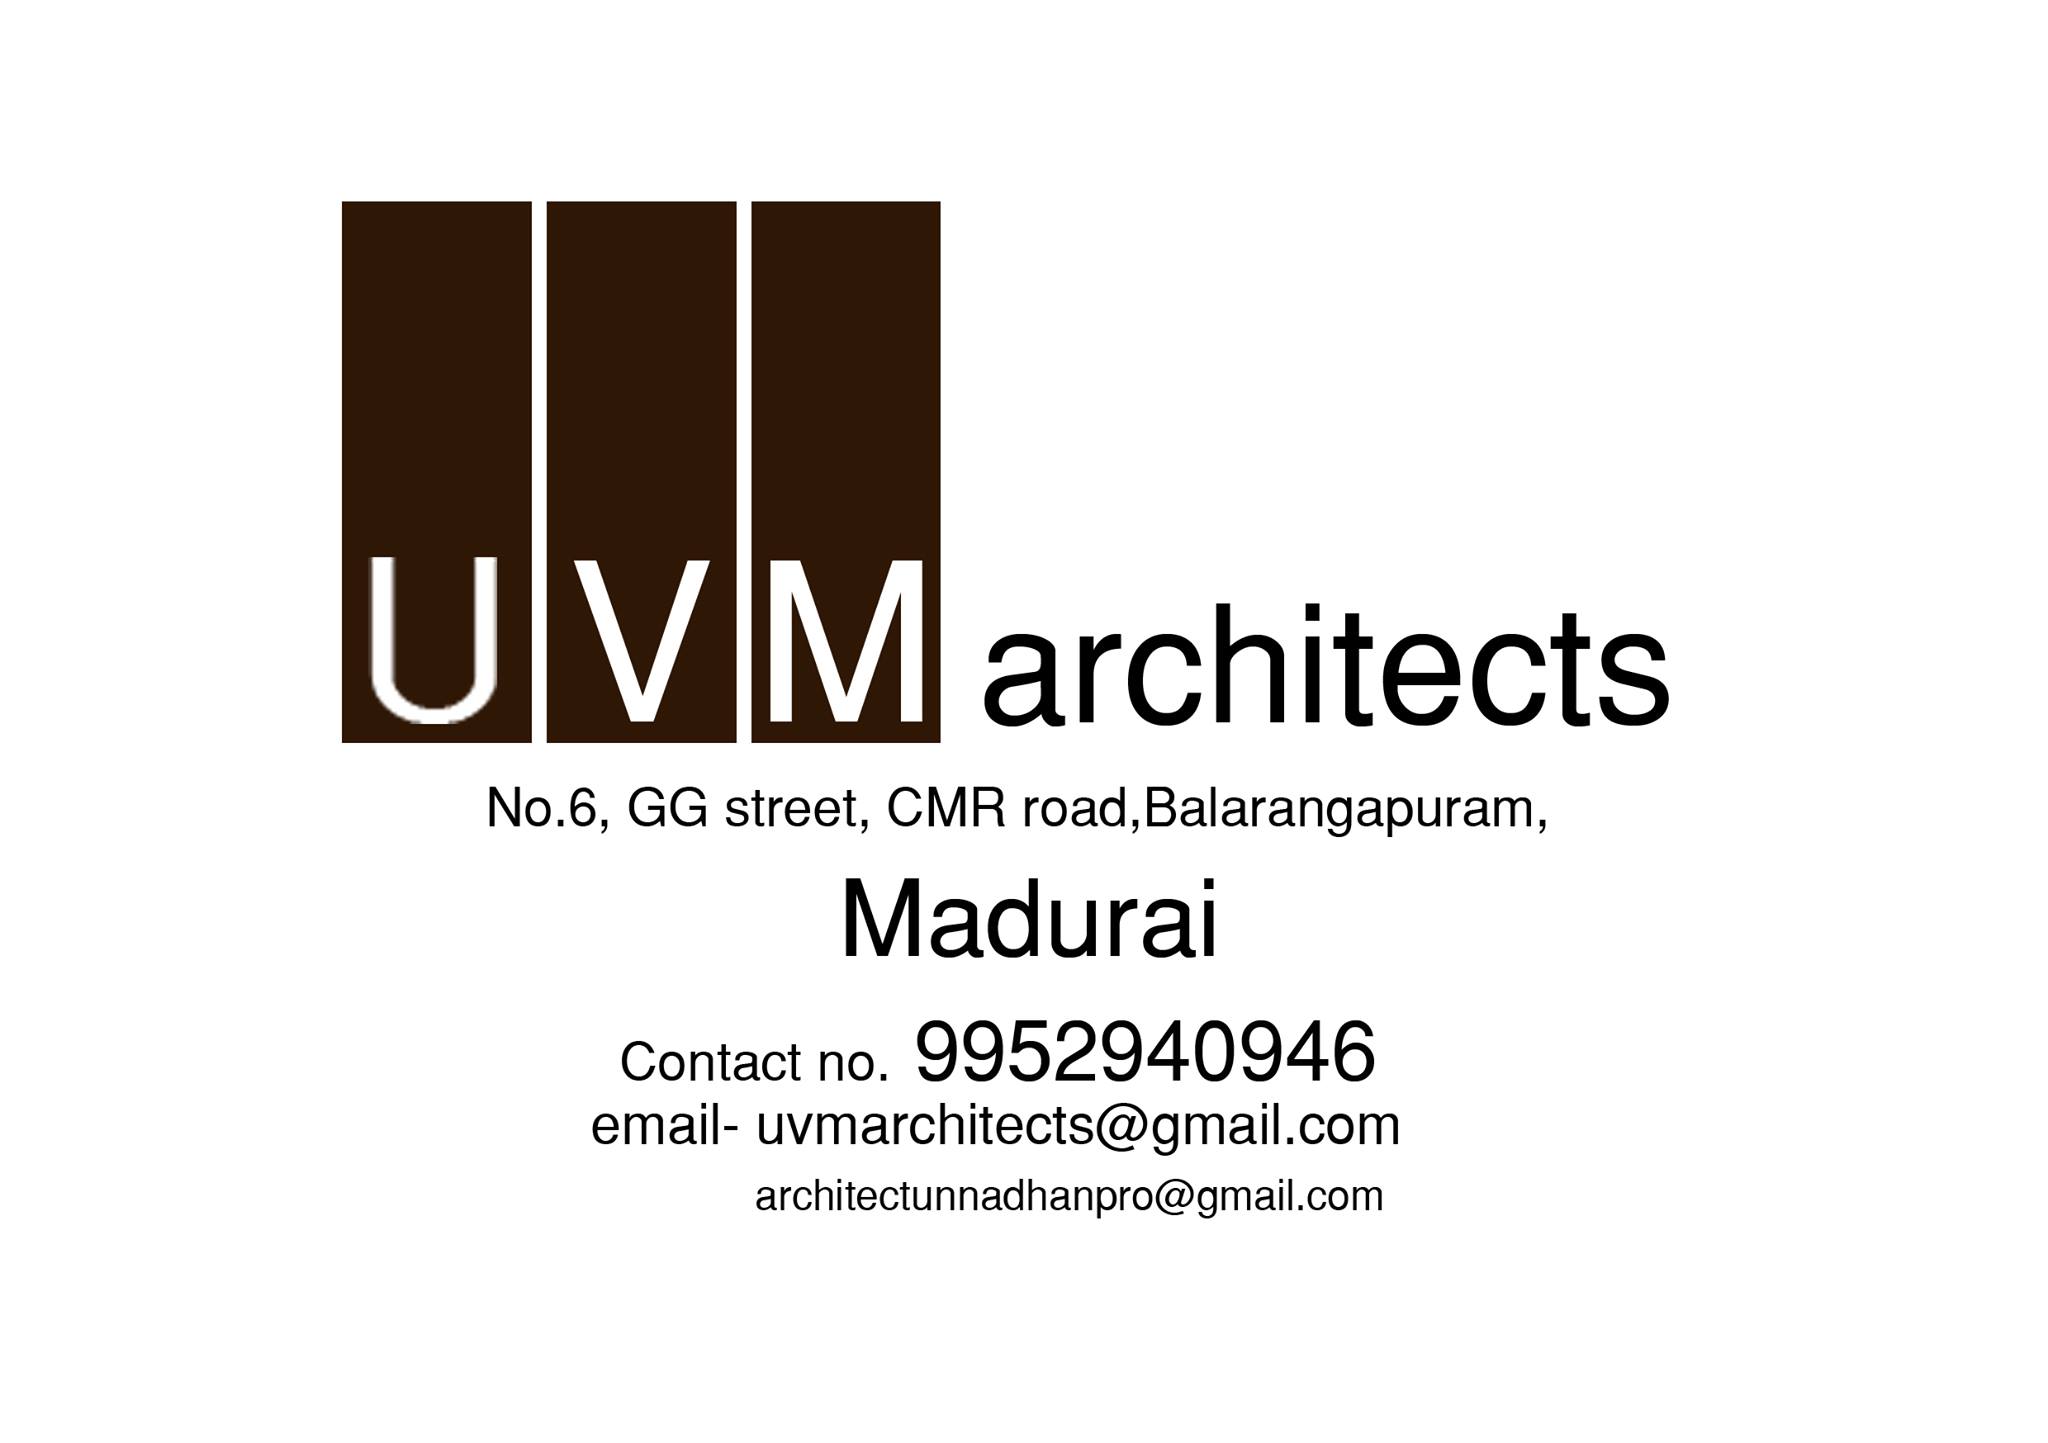 UVM Architects|Architect|Professional Services